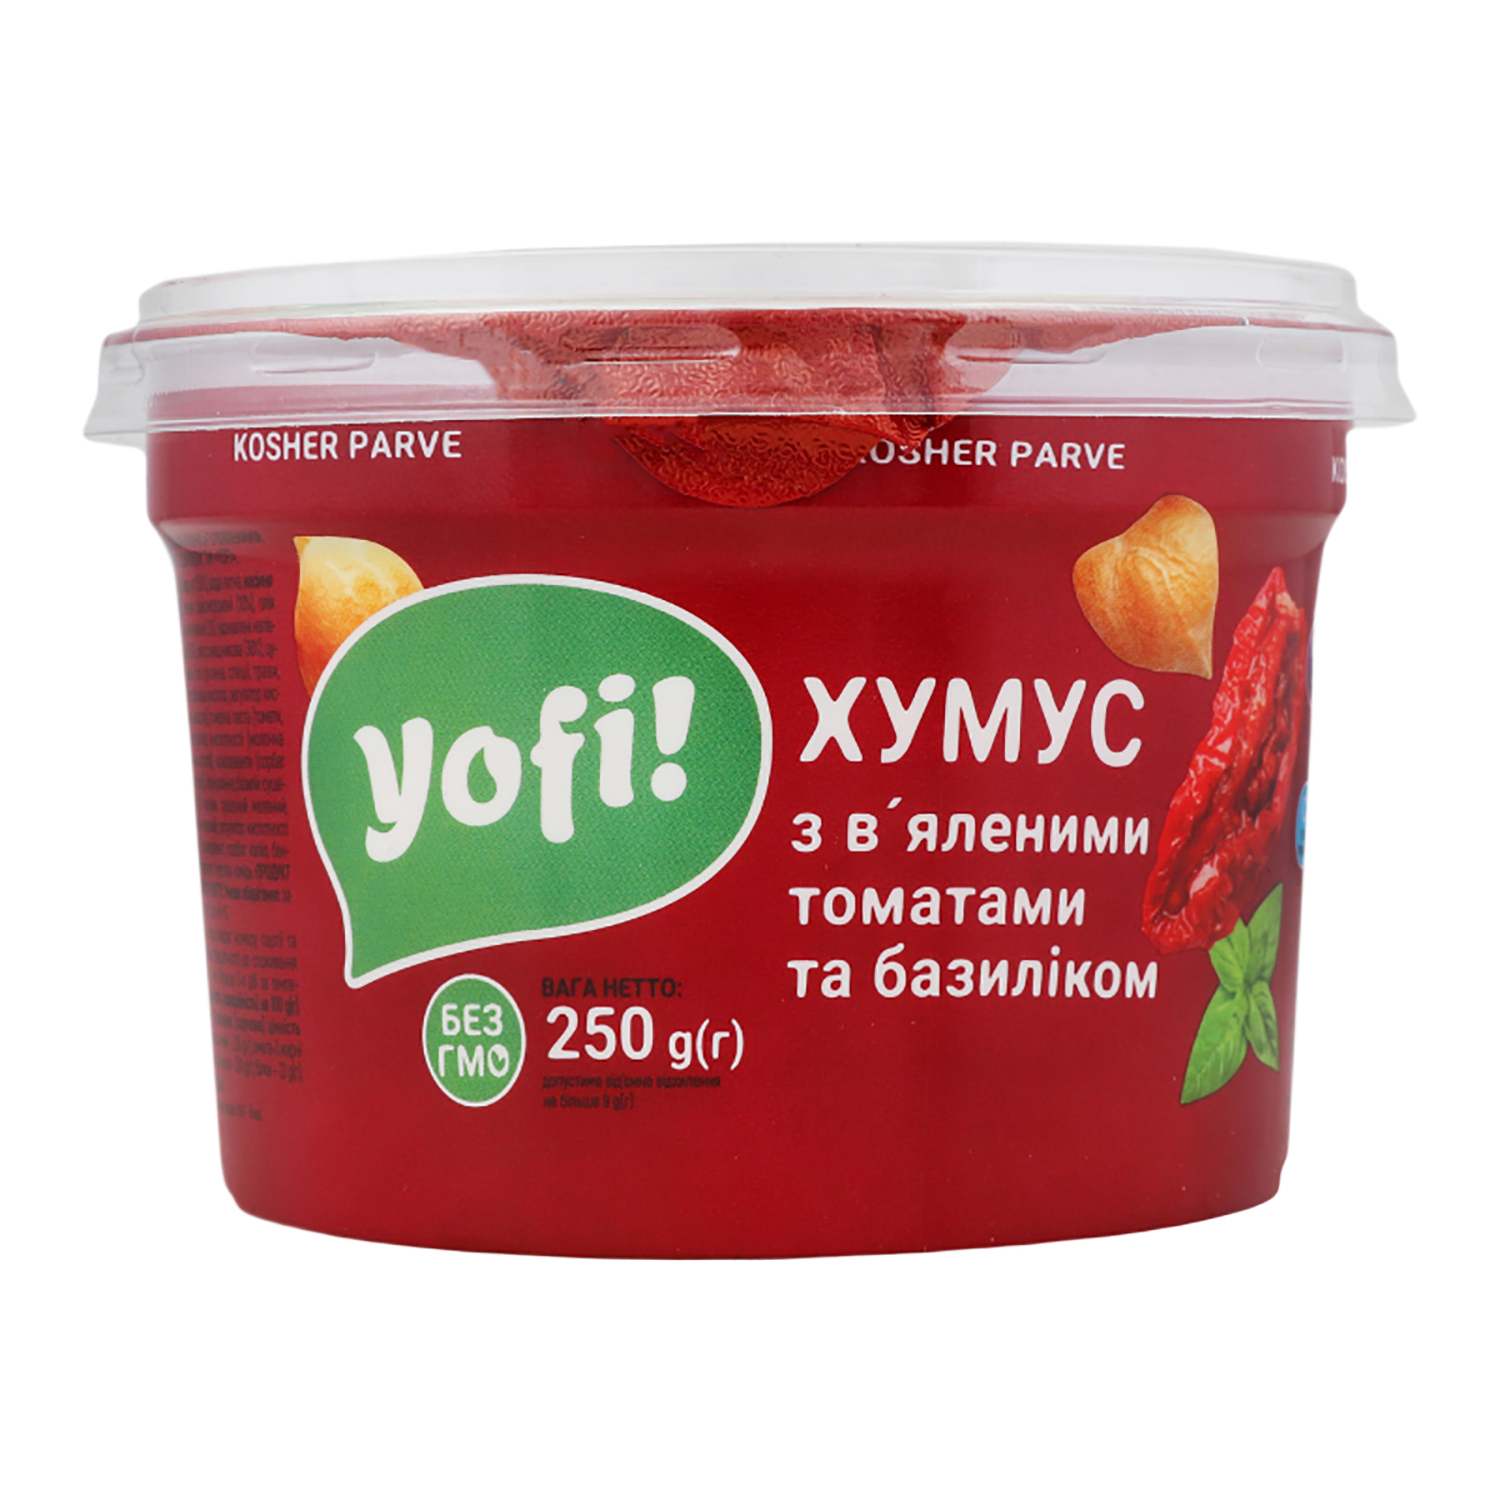 Yofi! Hummus with Sun-dried Tomatoes and Basil 250g